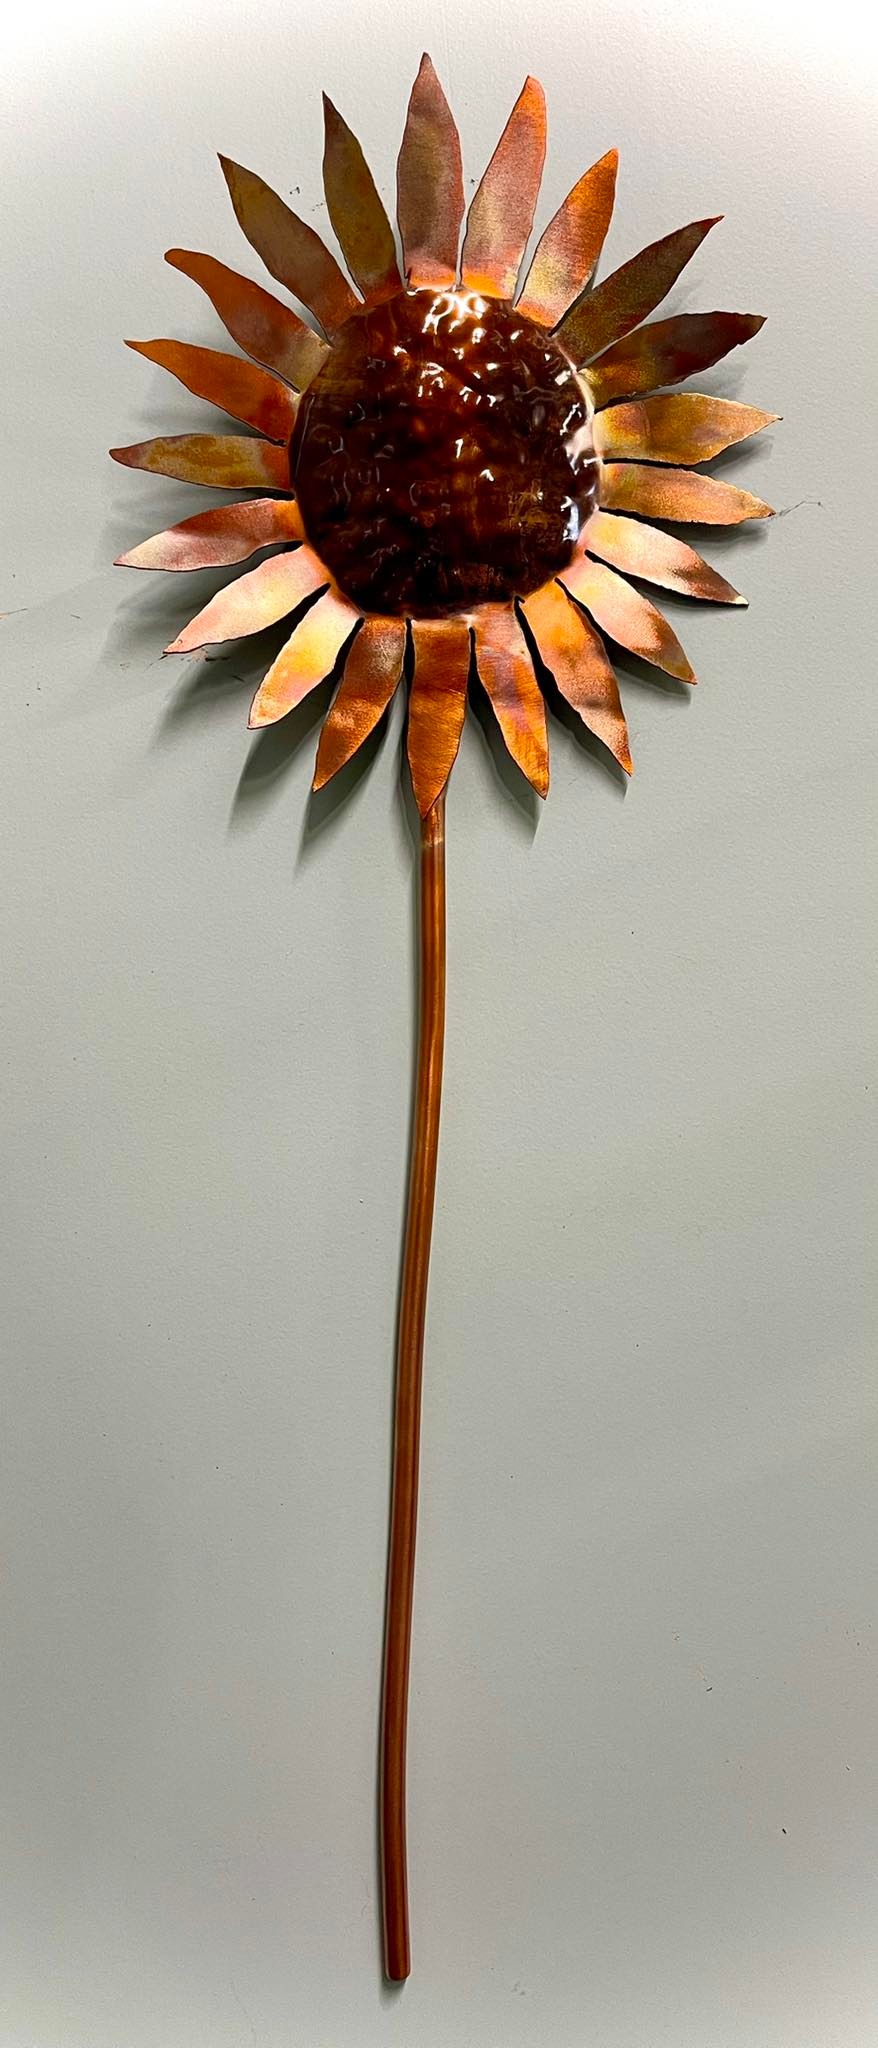 Copper Sunflowers Wall Art